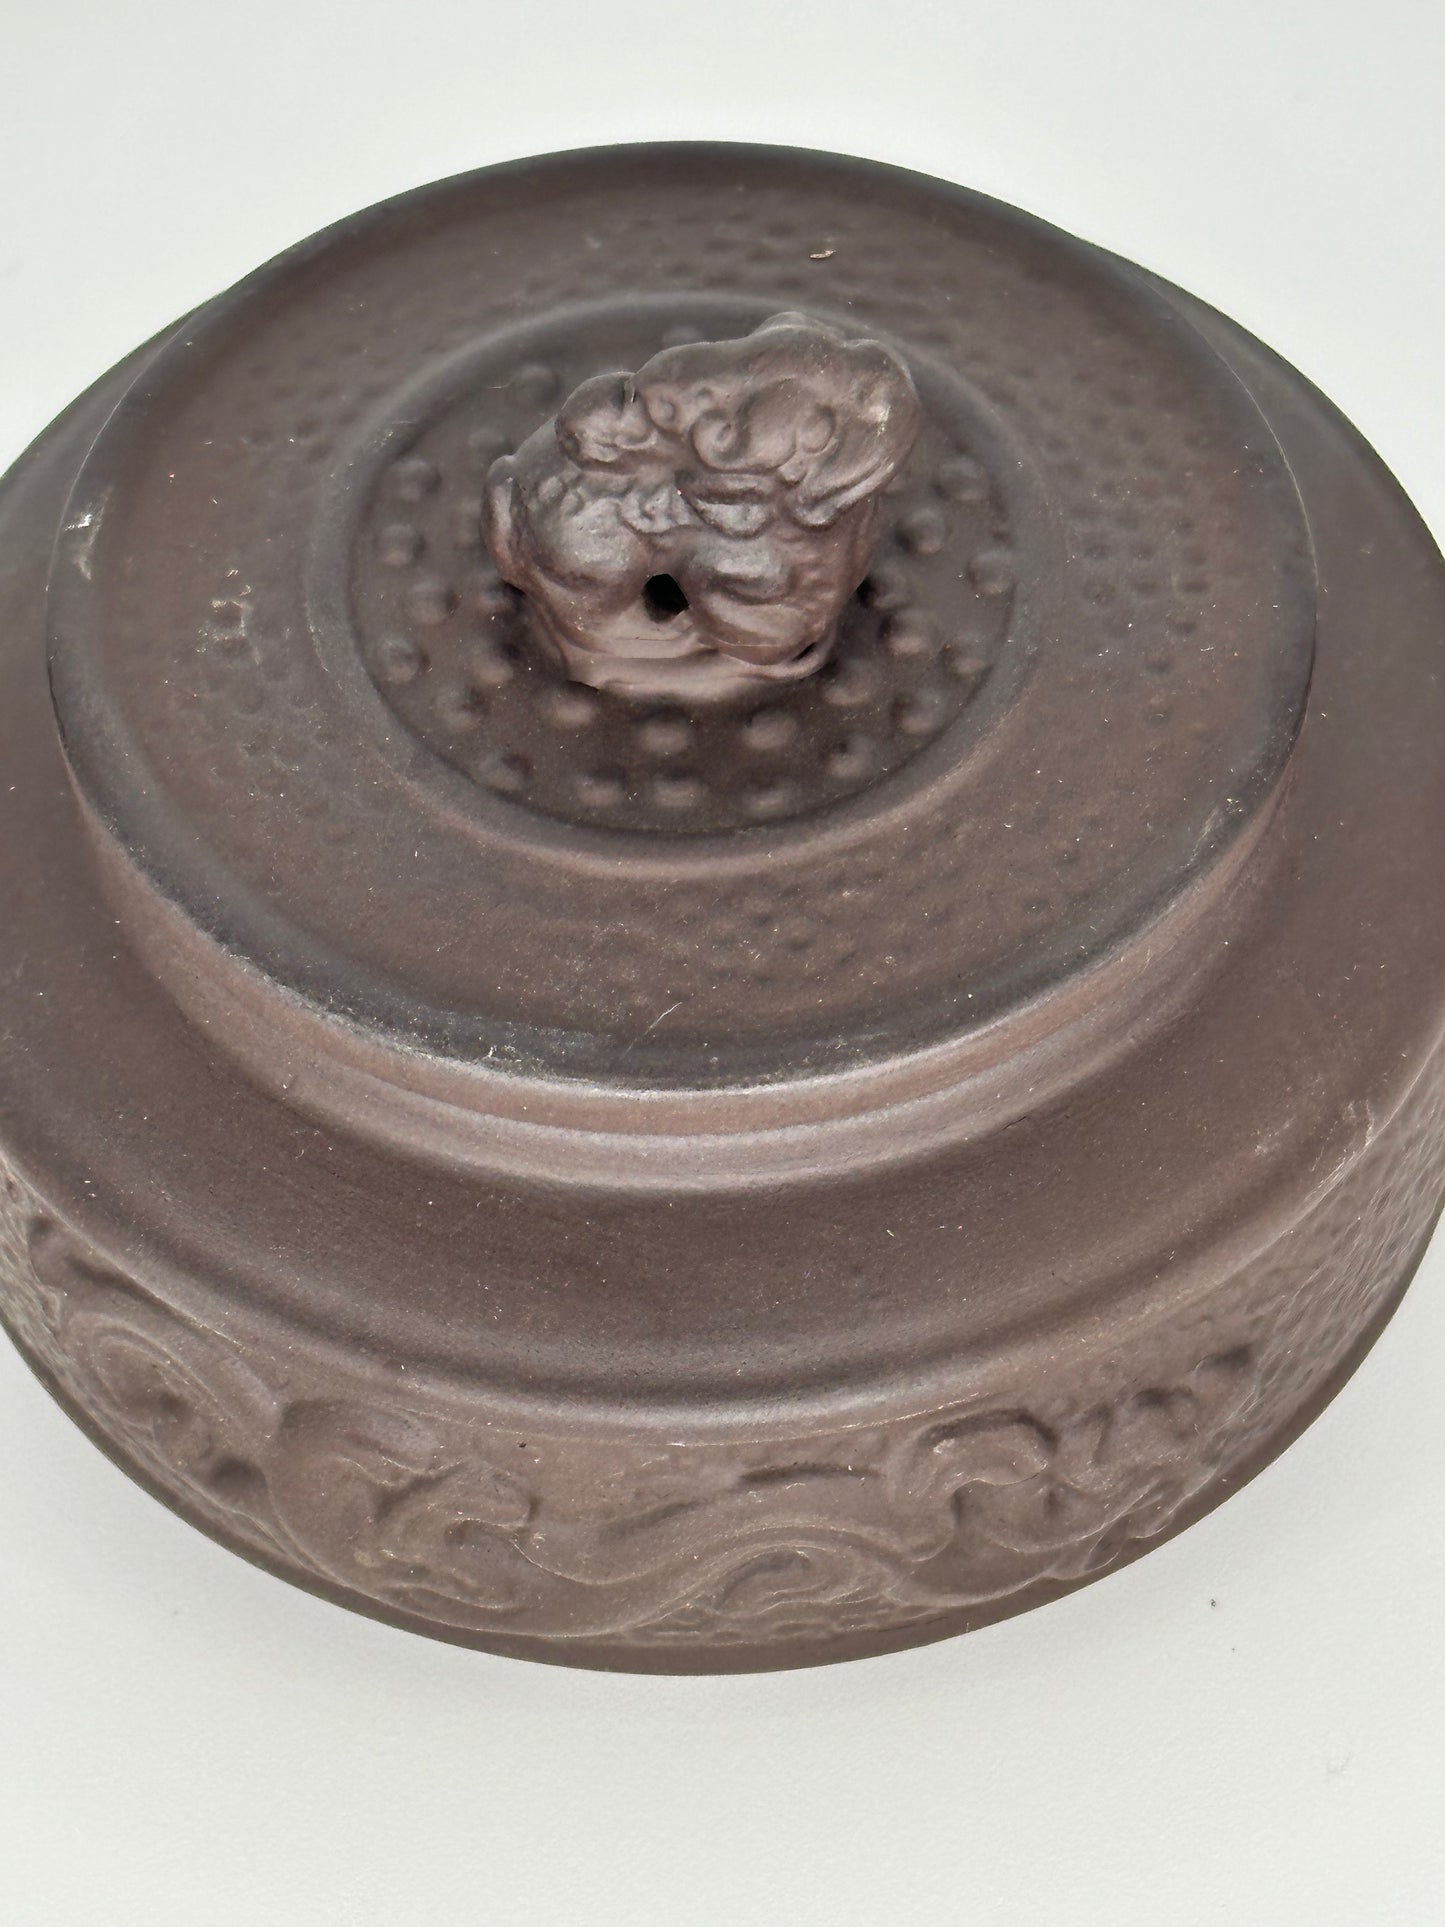 Clay Dragon Figure 5 pieces Tea Pot Set